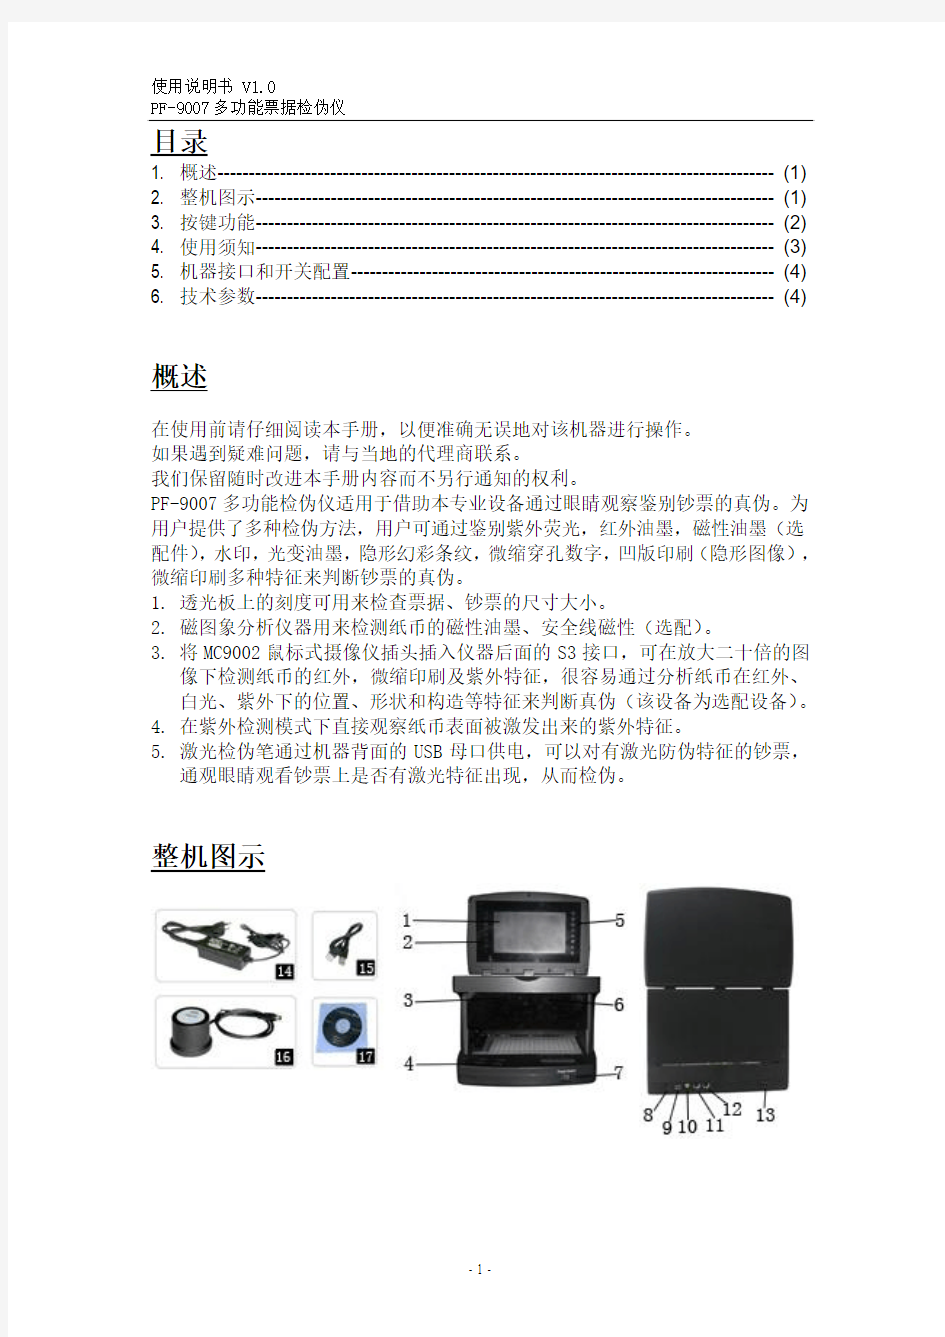 PF-9007 中文说明书V1.0